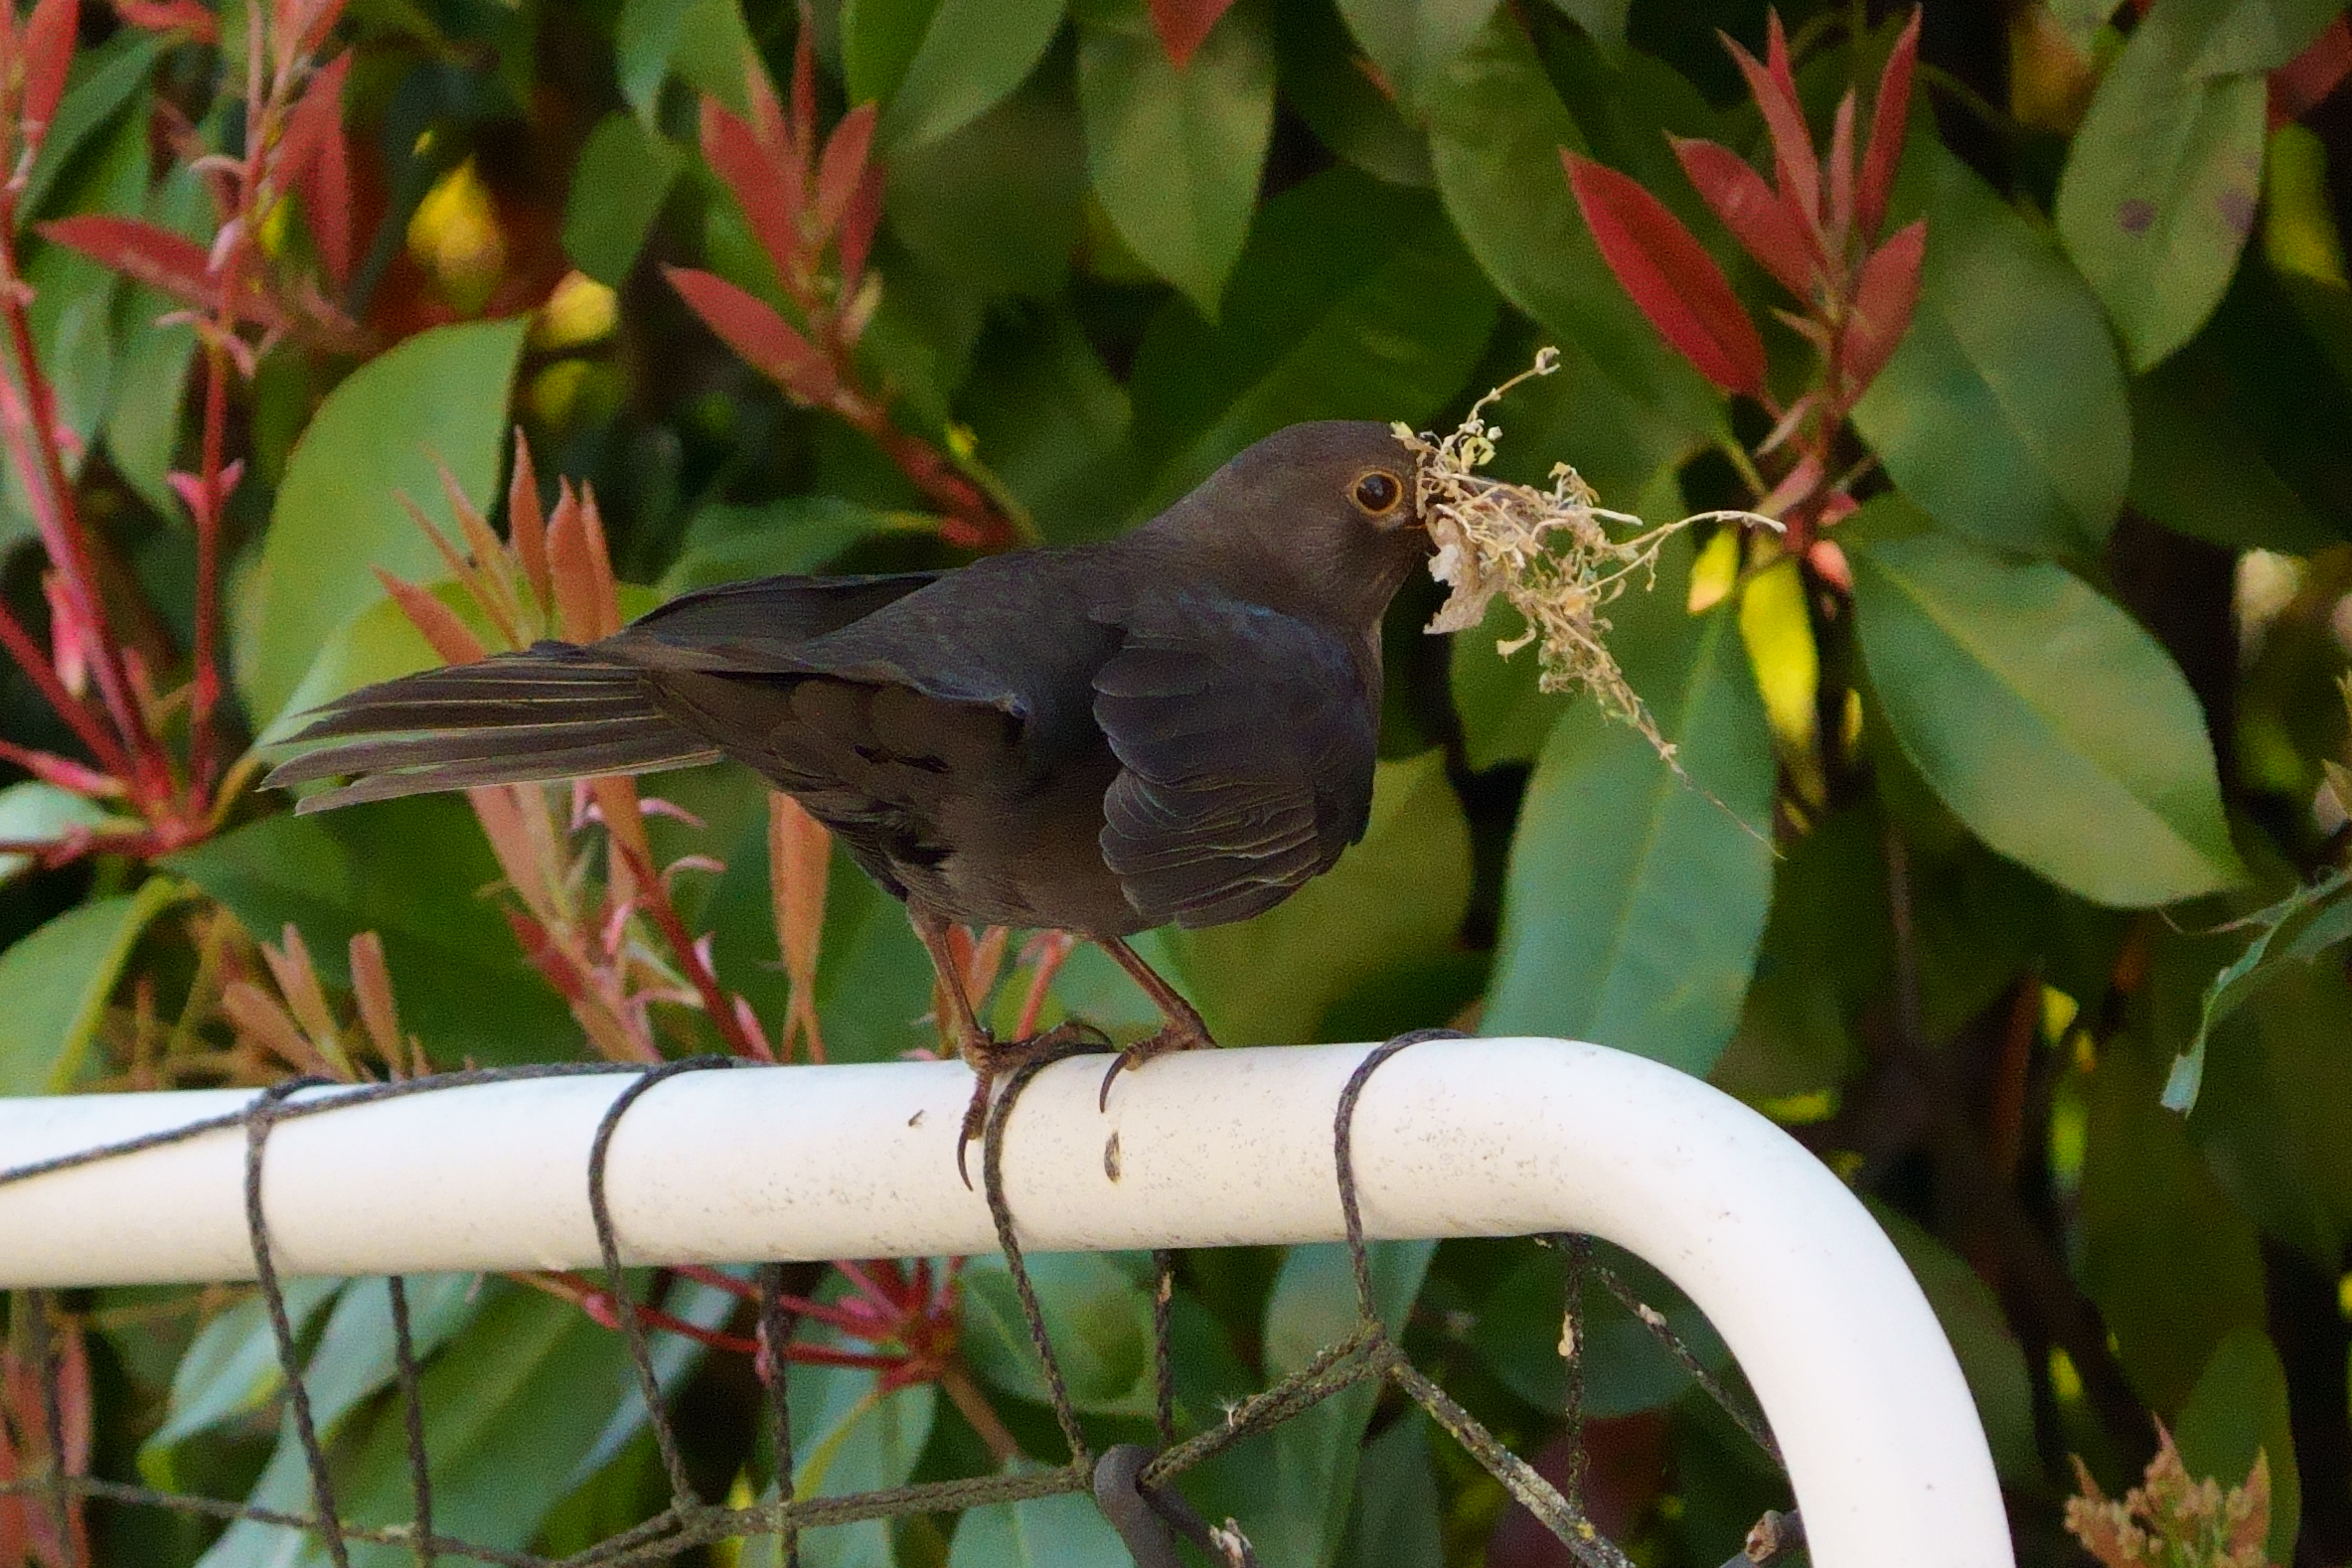 Female blackbird in nest construction...